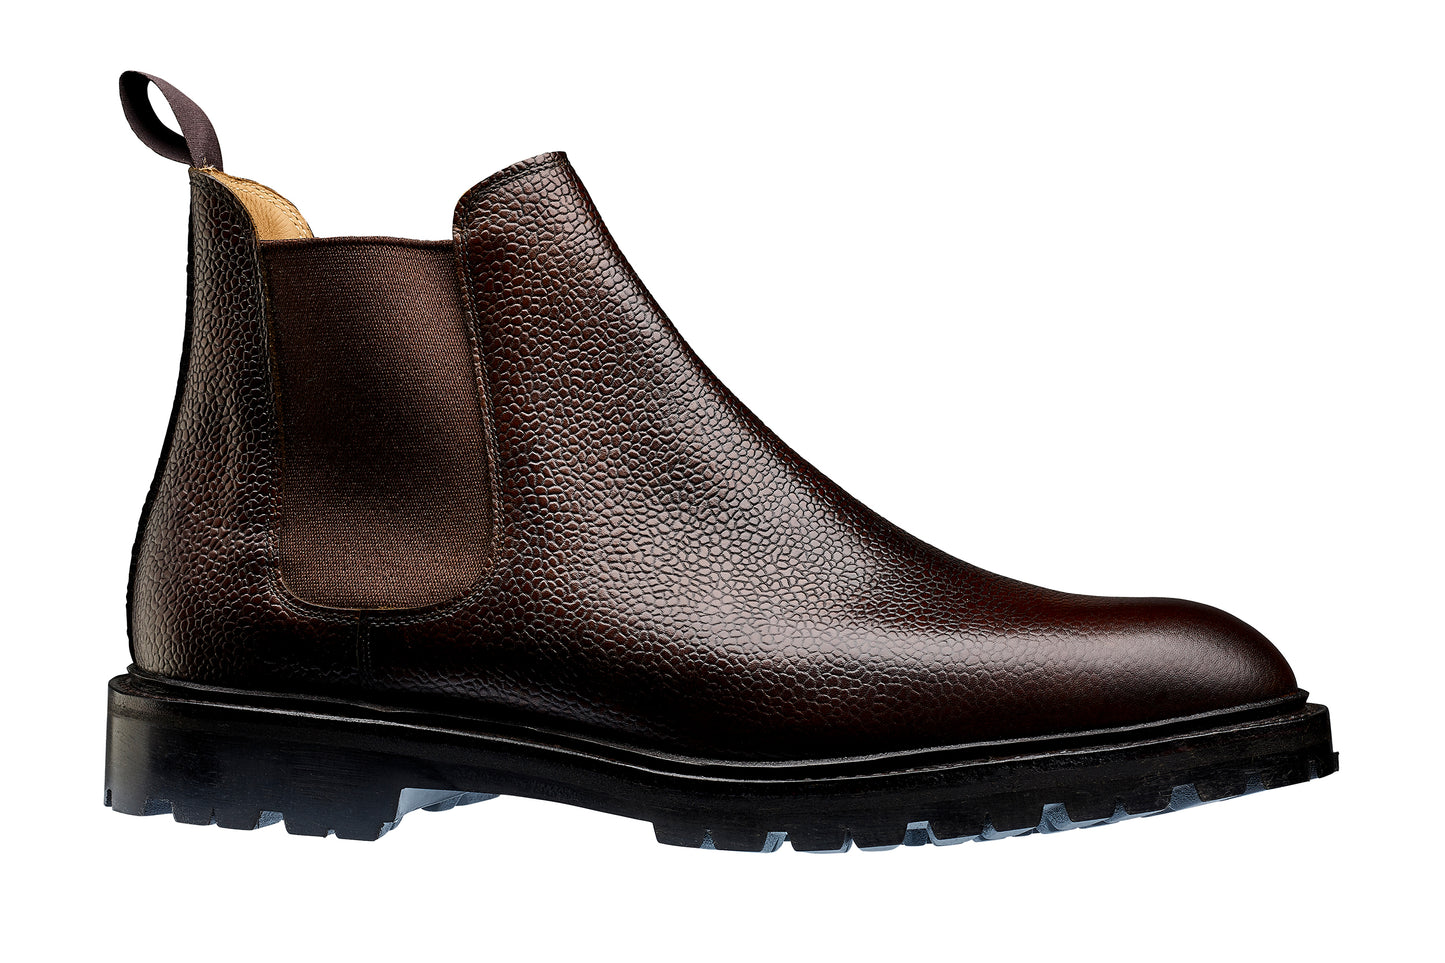 Chelsea 11, dark brown scotch grain, chelsea boot made in leather, branded Crockett & Jones